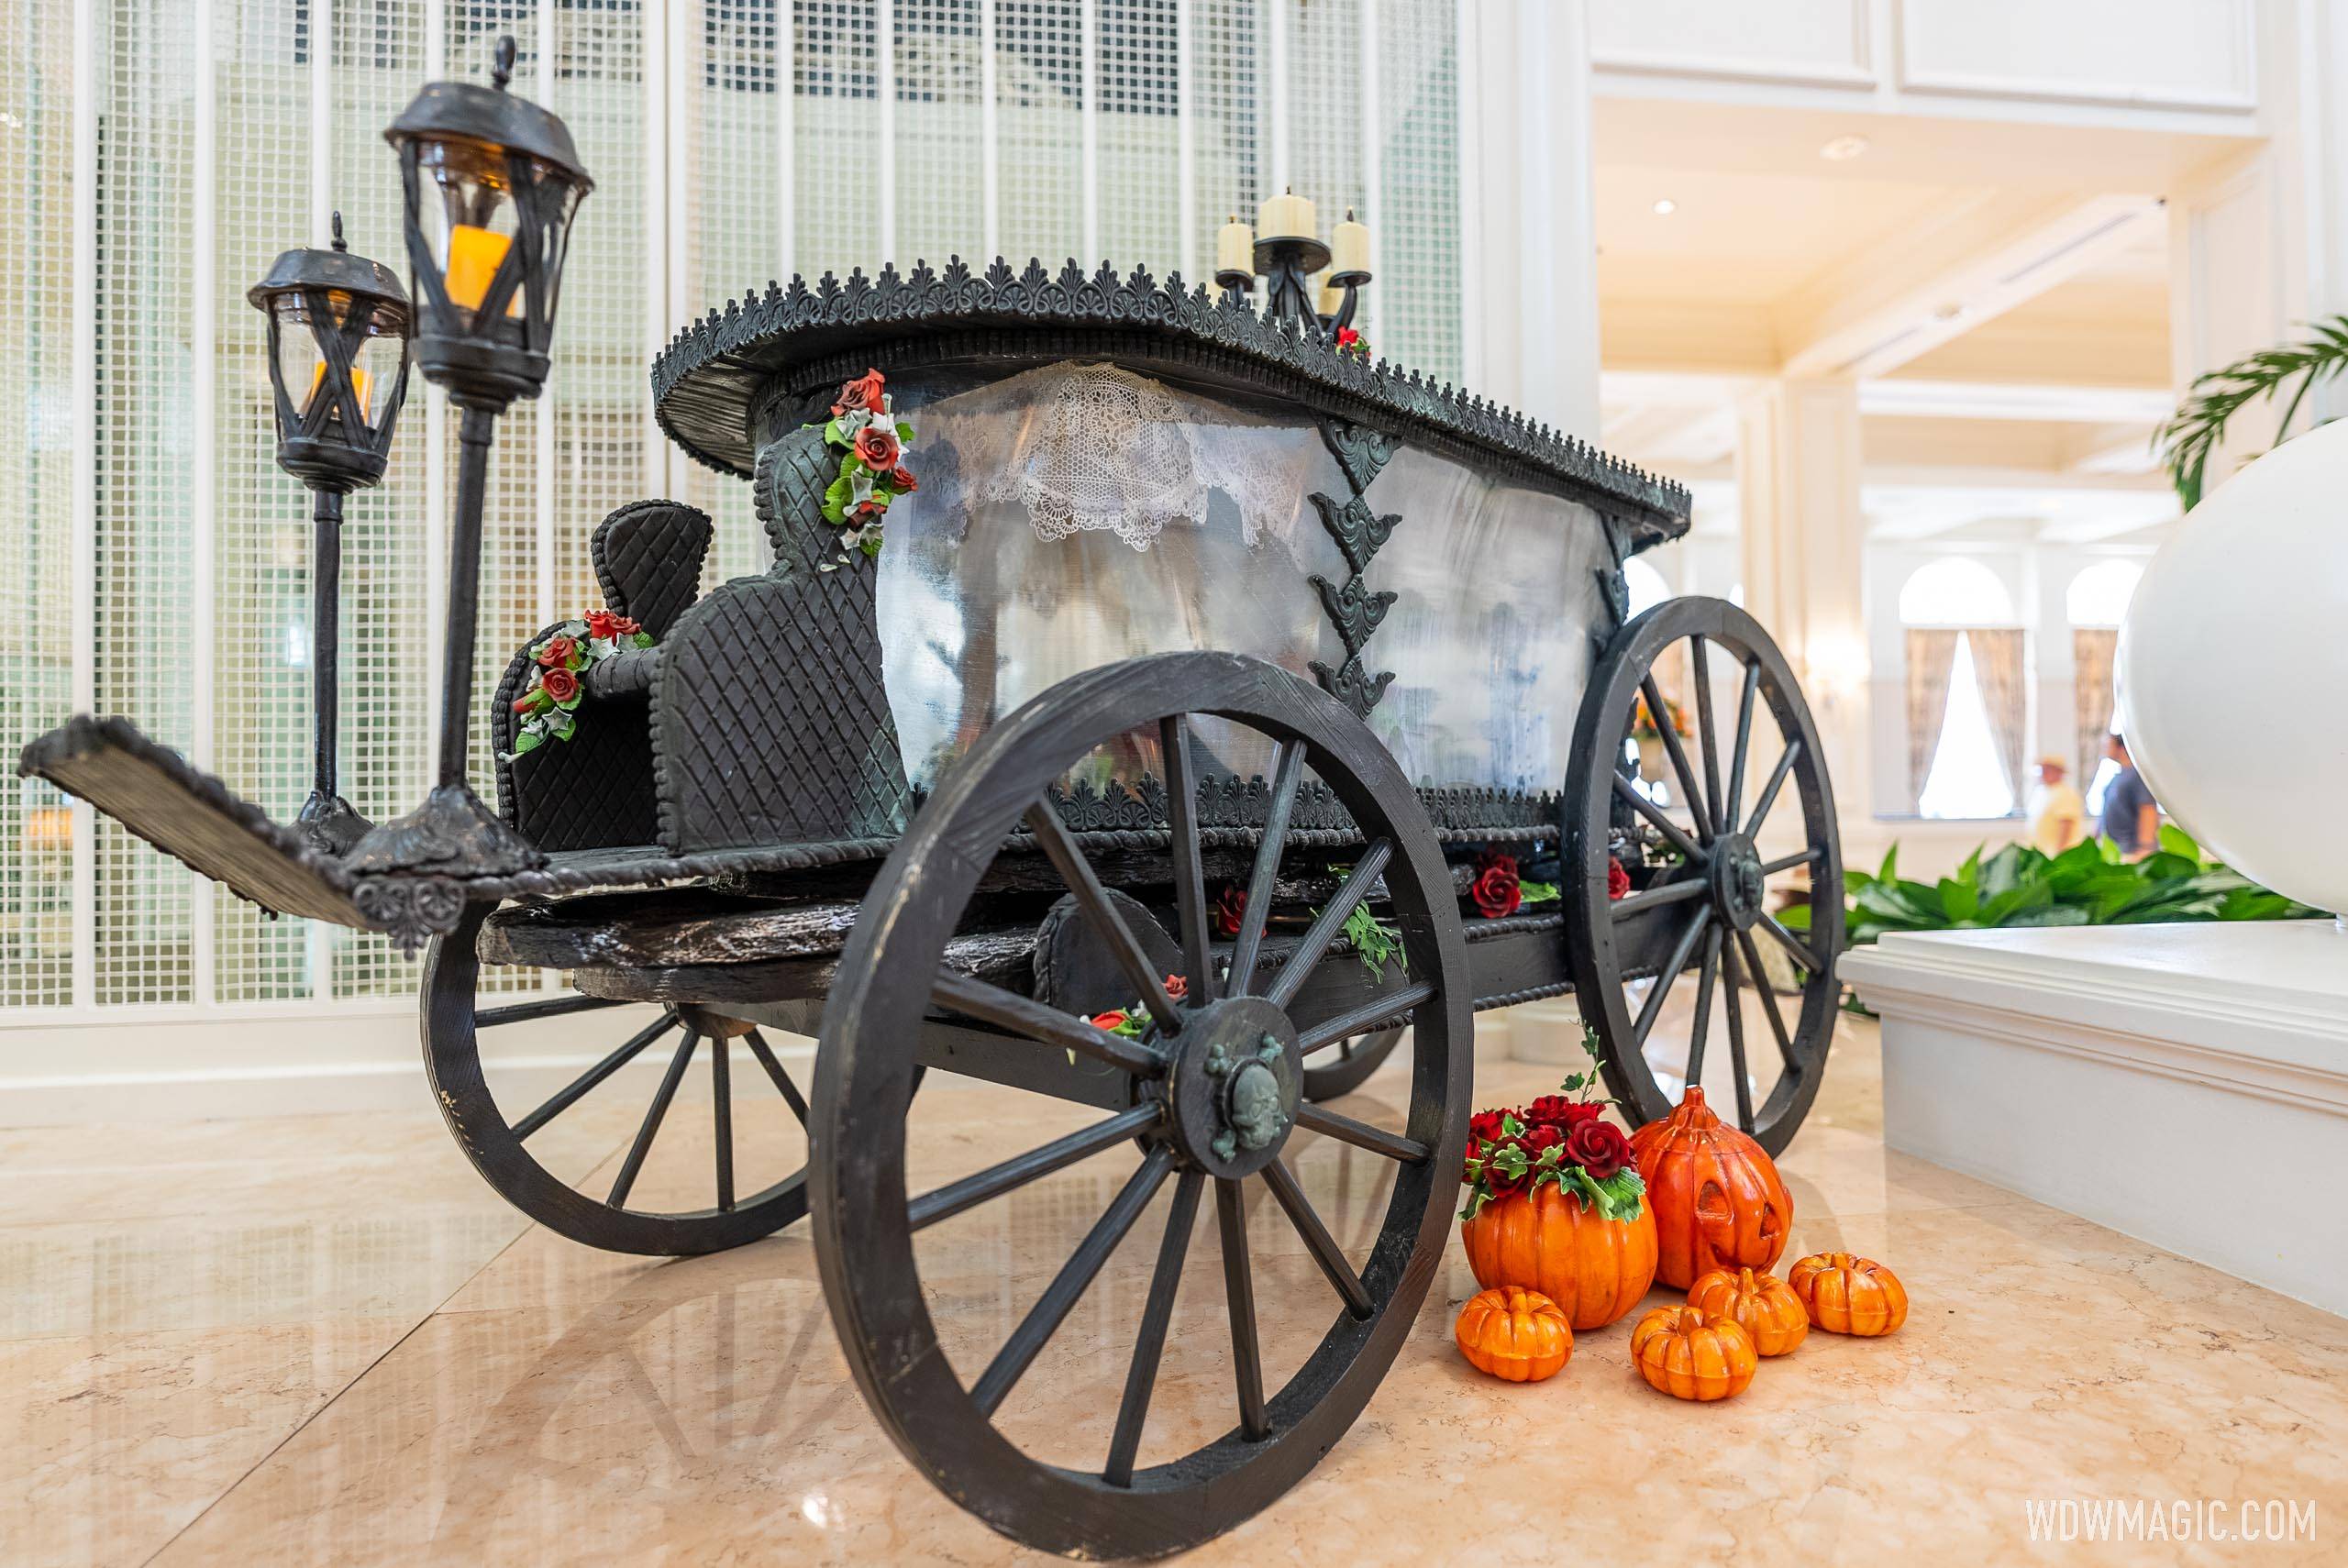 Grand Floridian Resort Haunted Mansion chocolate display